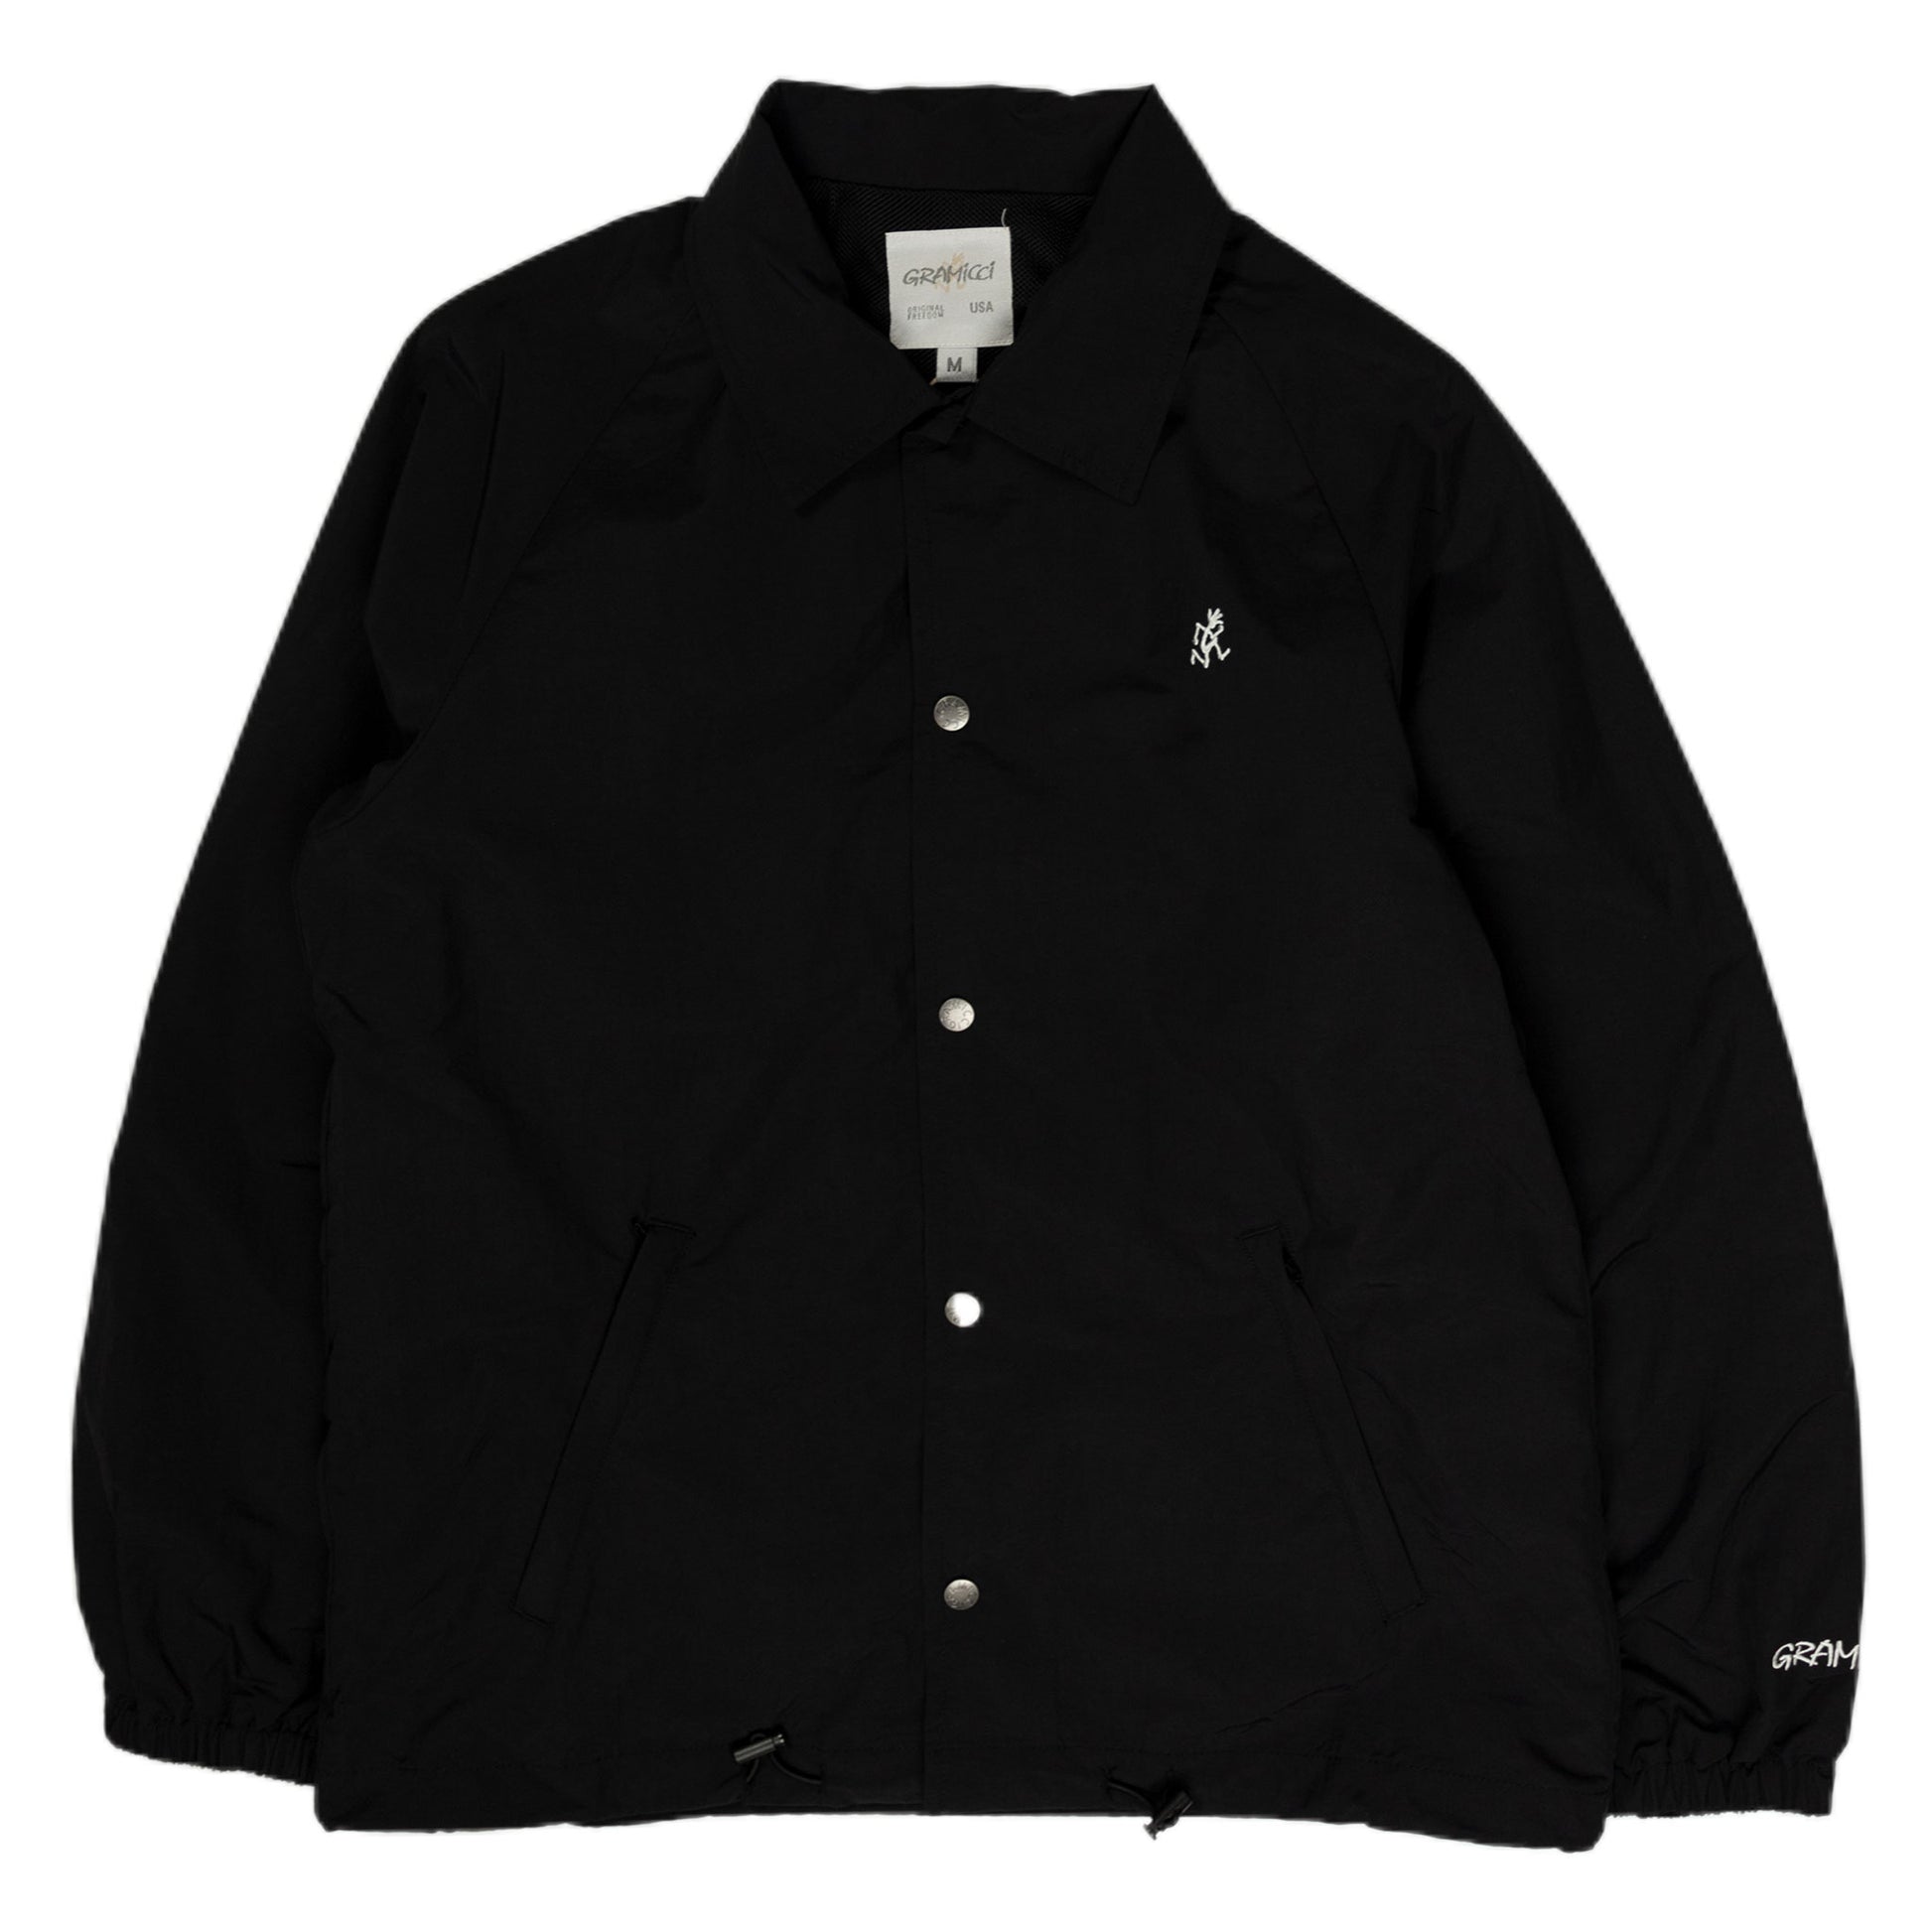 Gramicci Coaches Jacket in Black